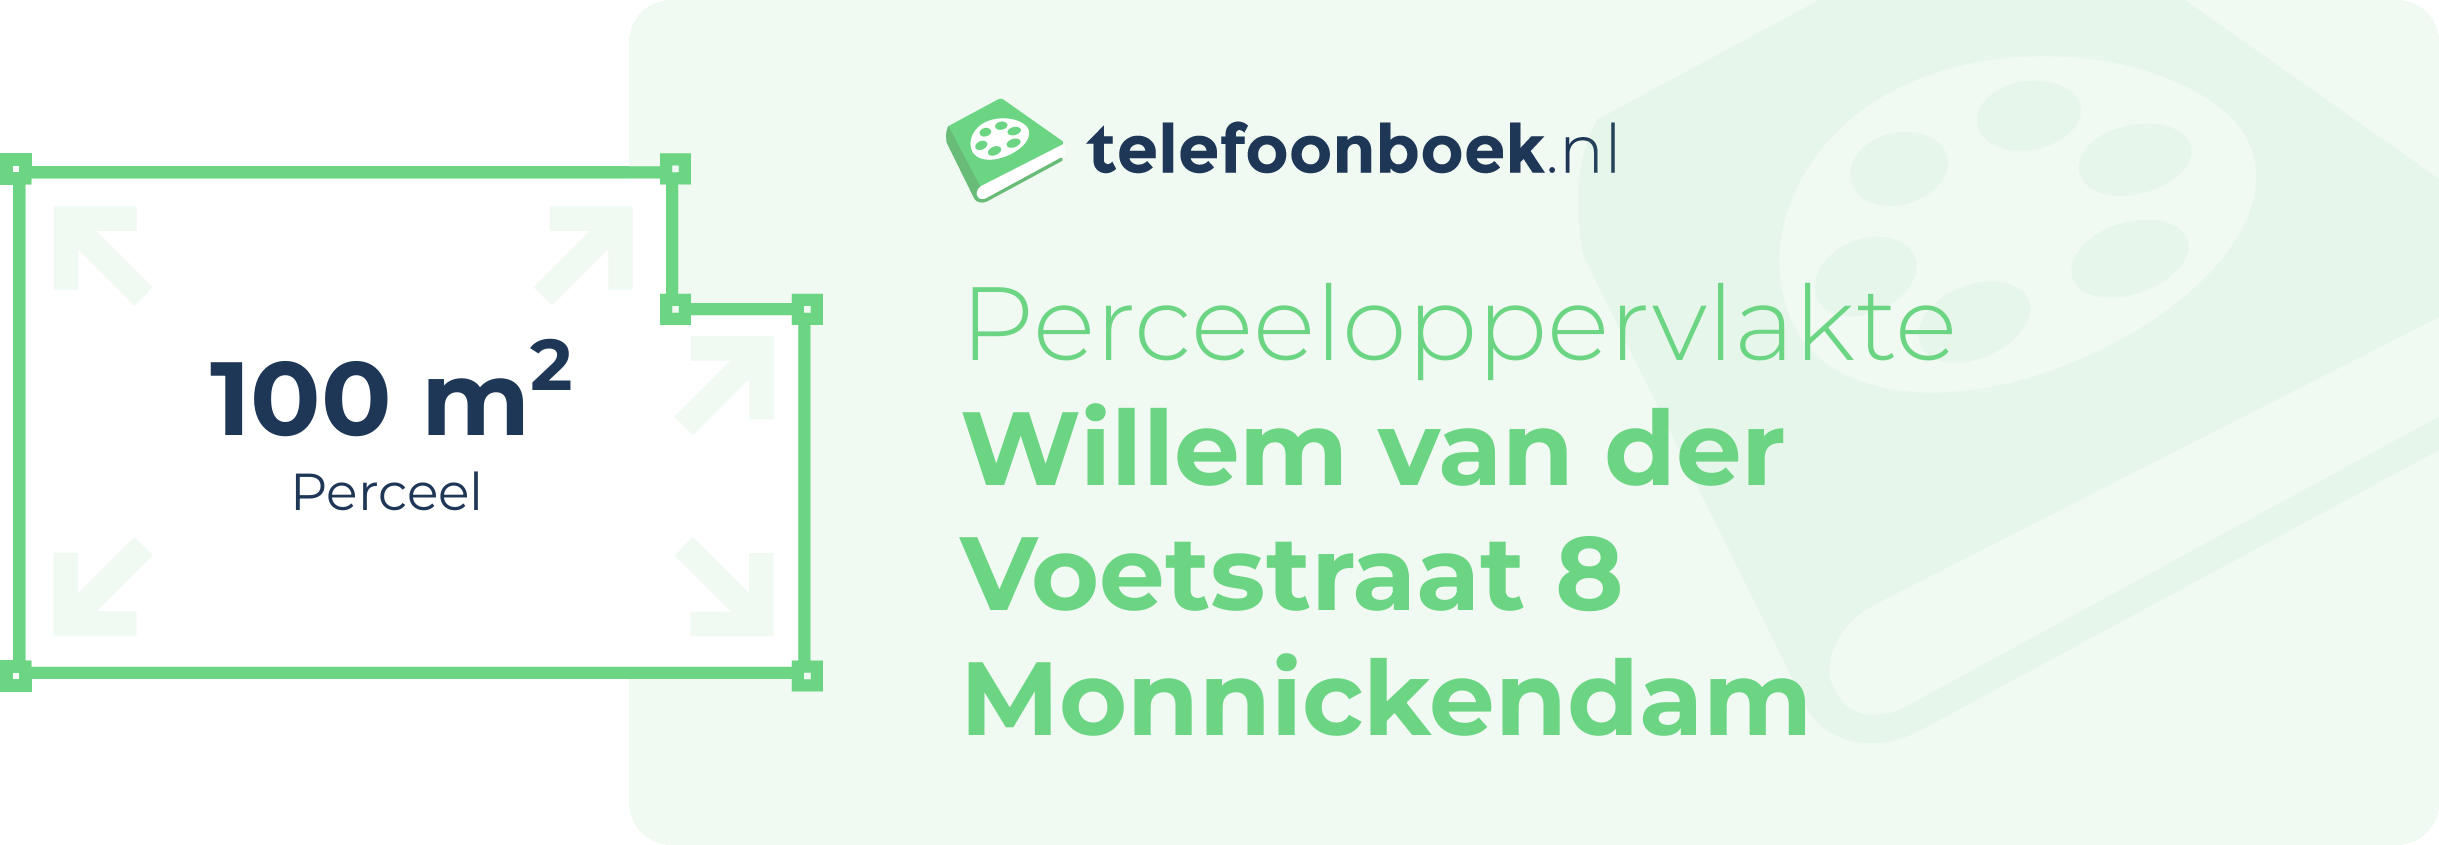 Perceeloppervlakte Willem Van Der Voetstraat 8 Monnickendam